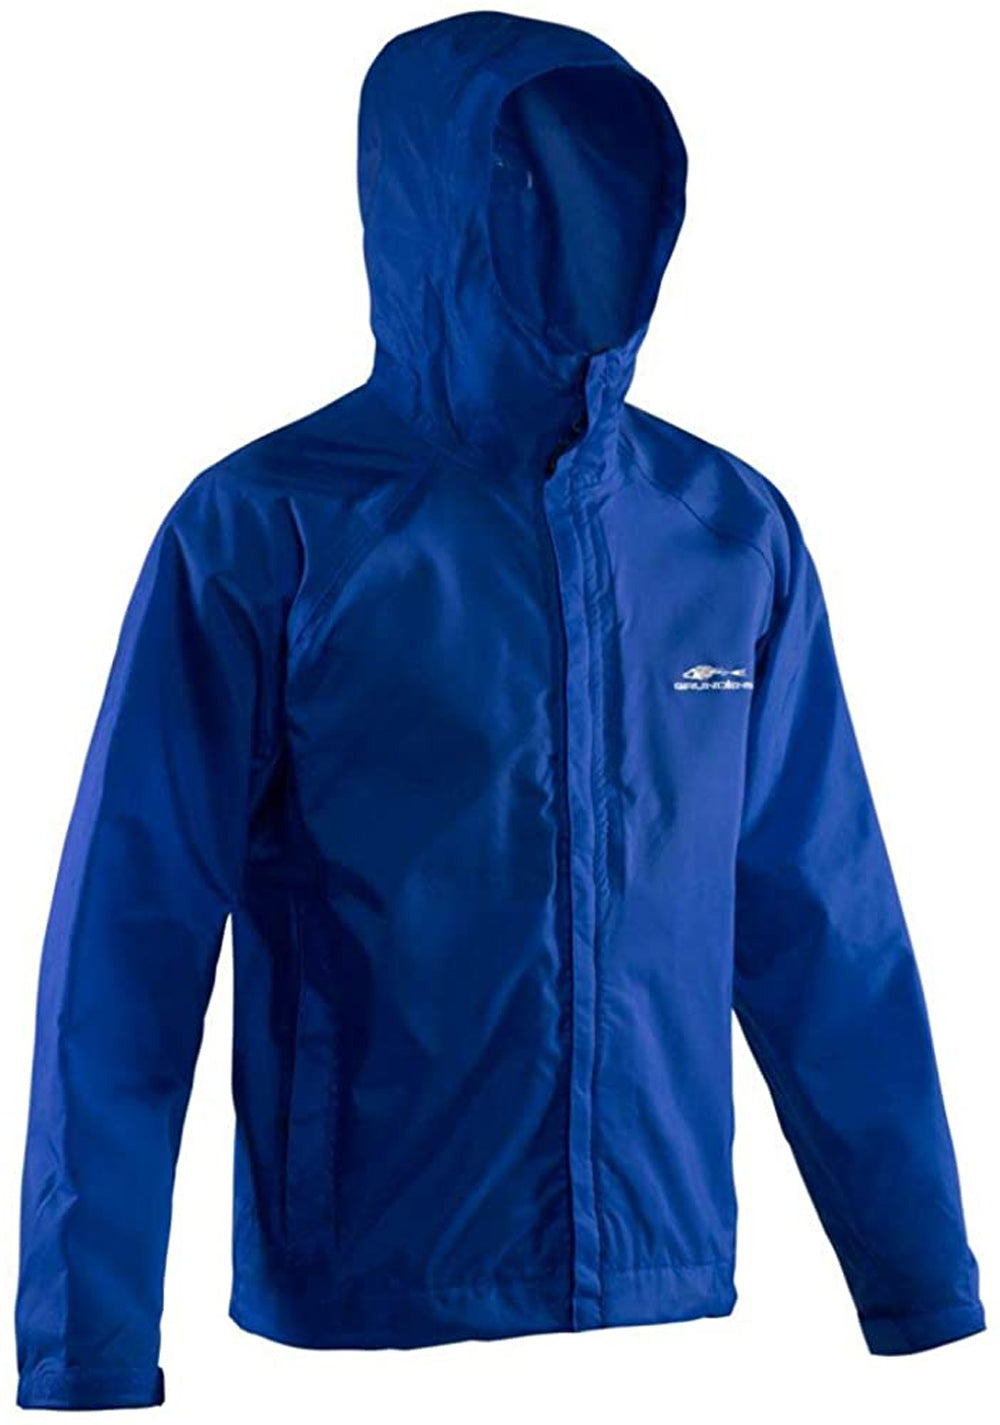 Weather Watch Jacket in Glacier Blue color